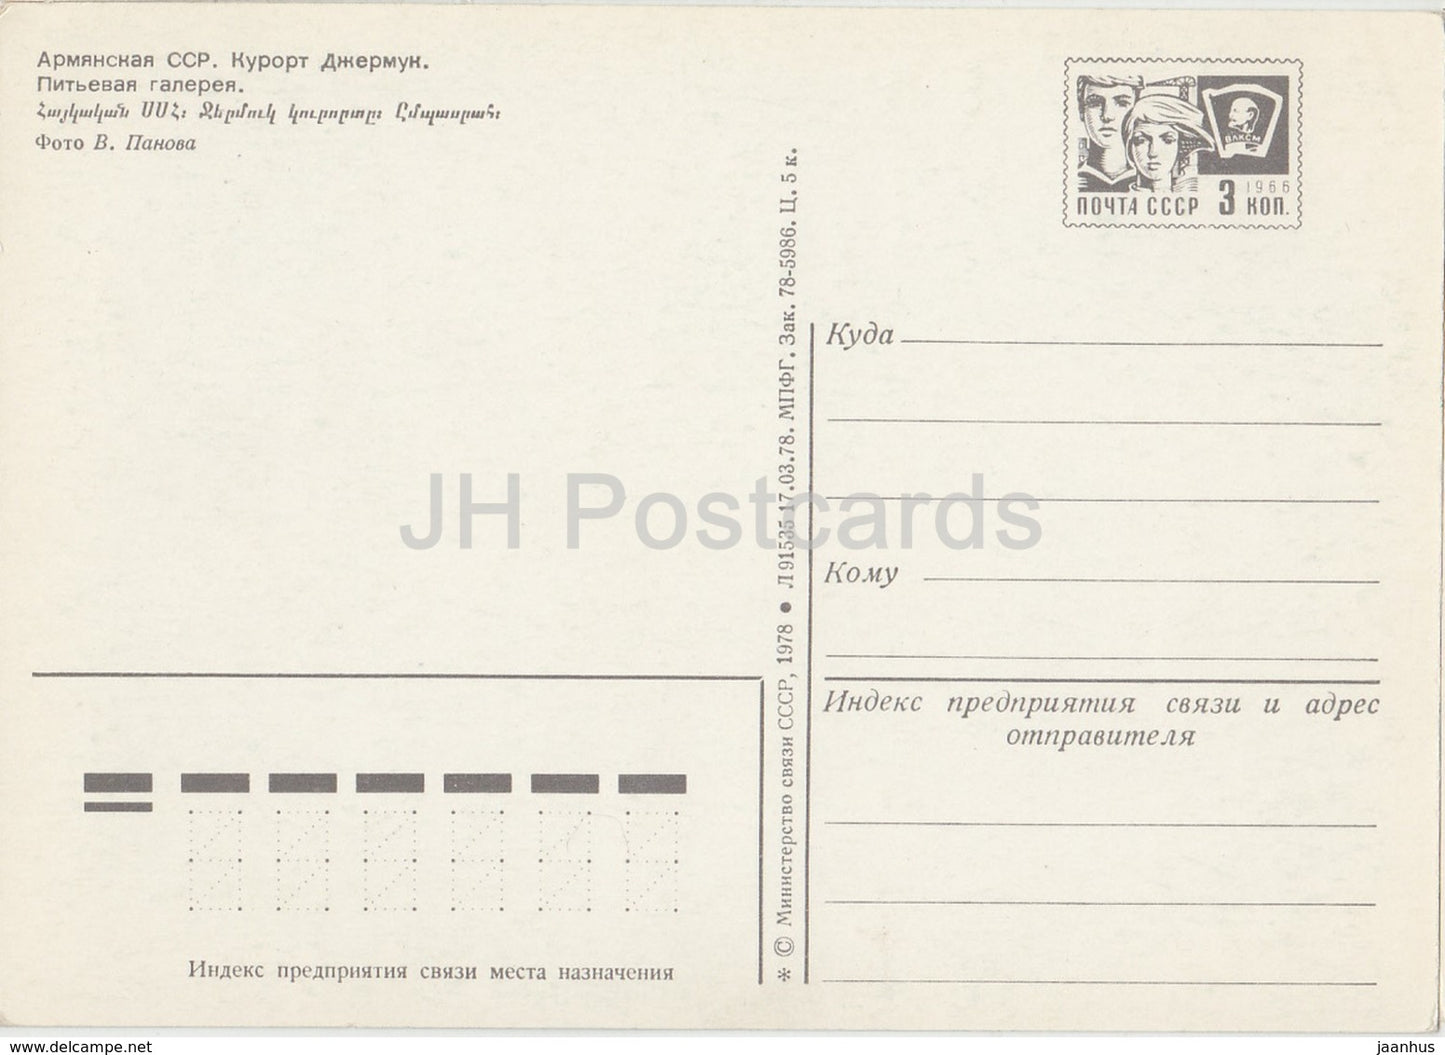 Jermuk Resort - Drinking Gallery - entier postal - 1978 - Arménie URSS - inutilisé